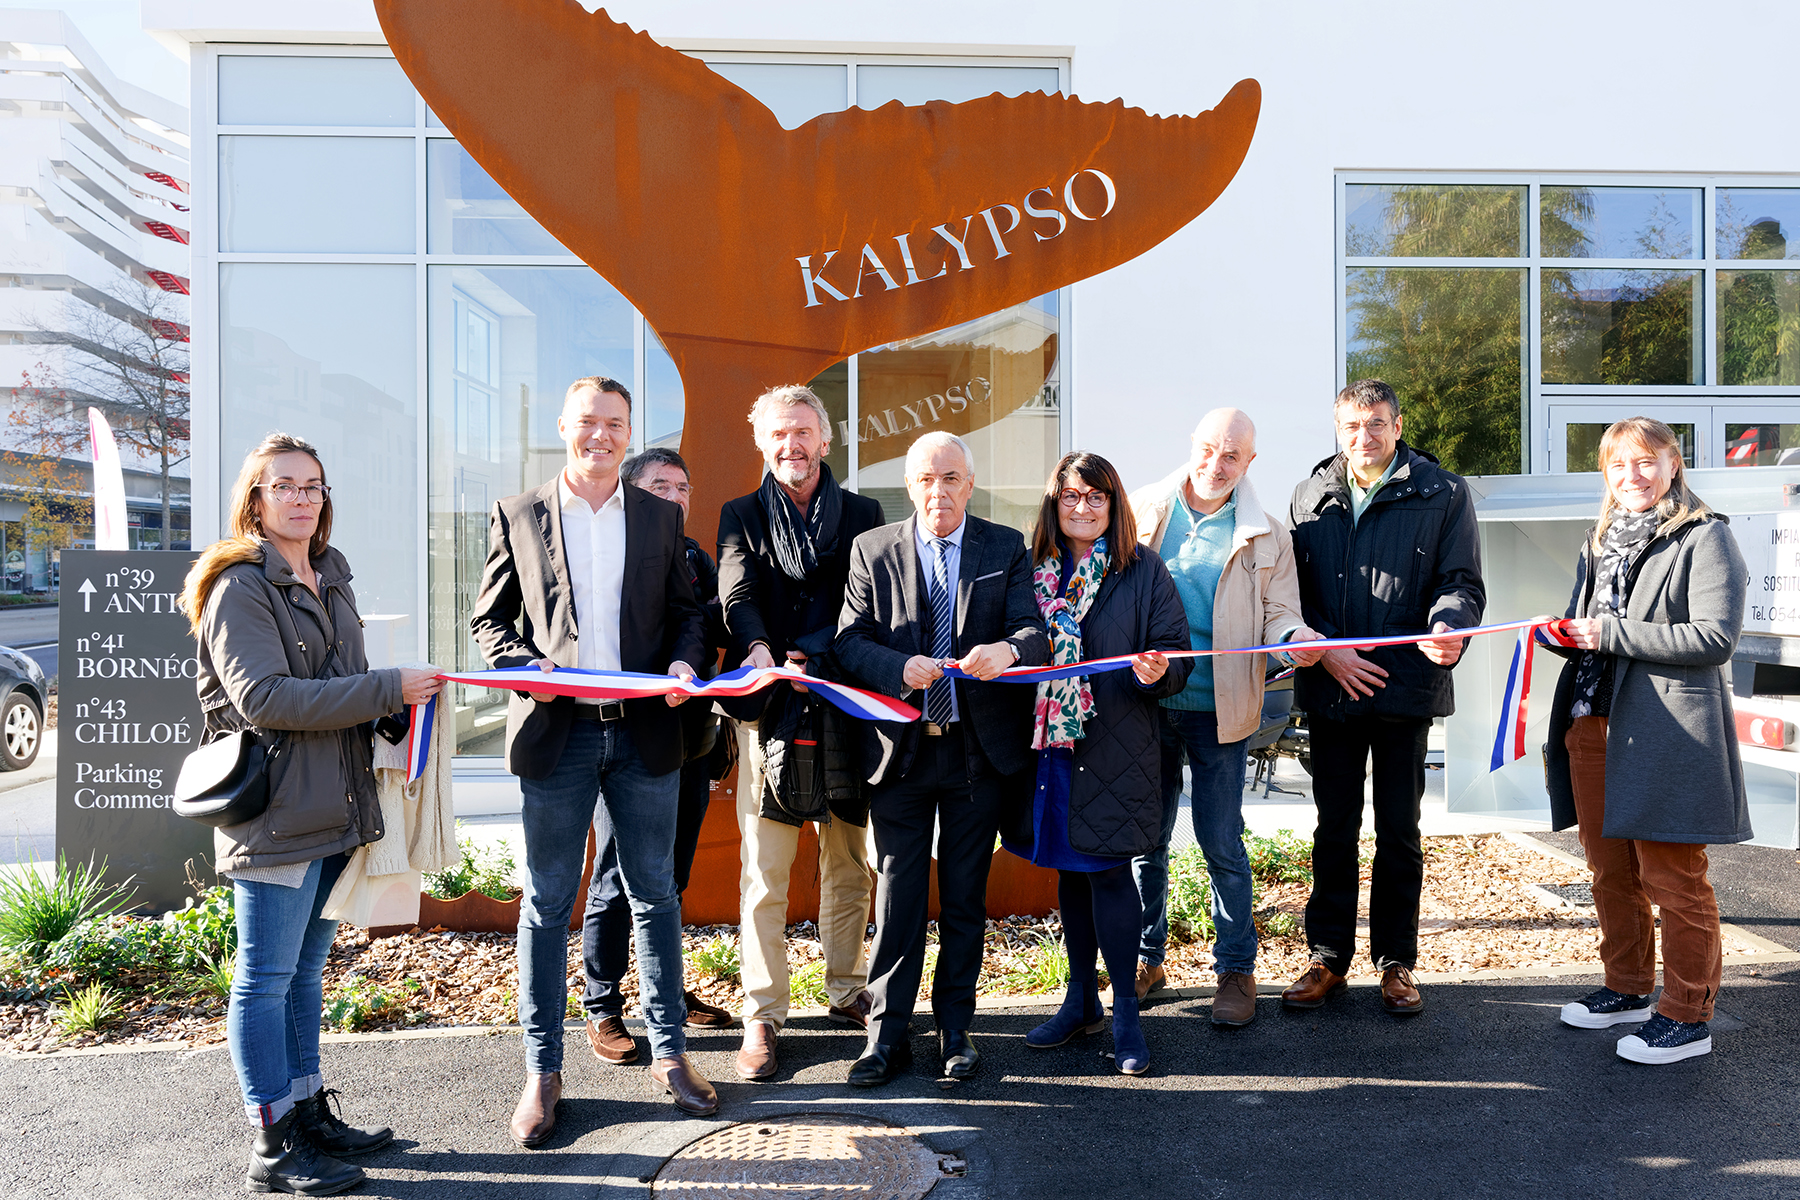 Inauguration de la résidence Kalypso à Anglet 